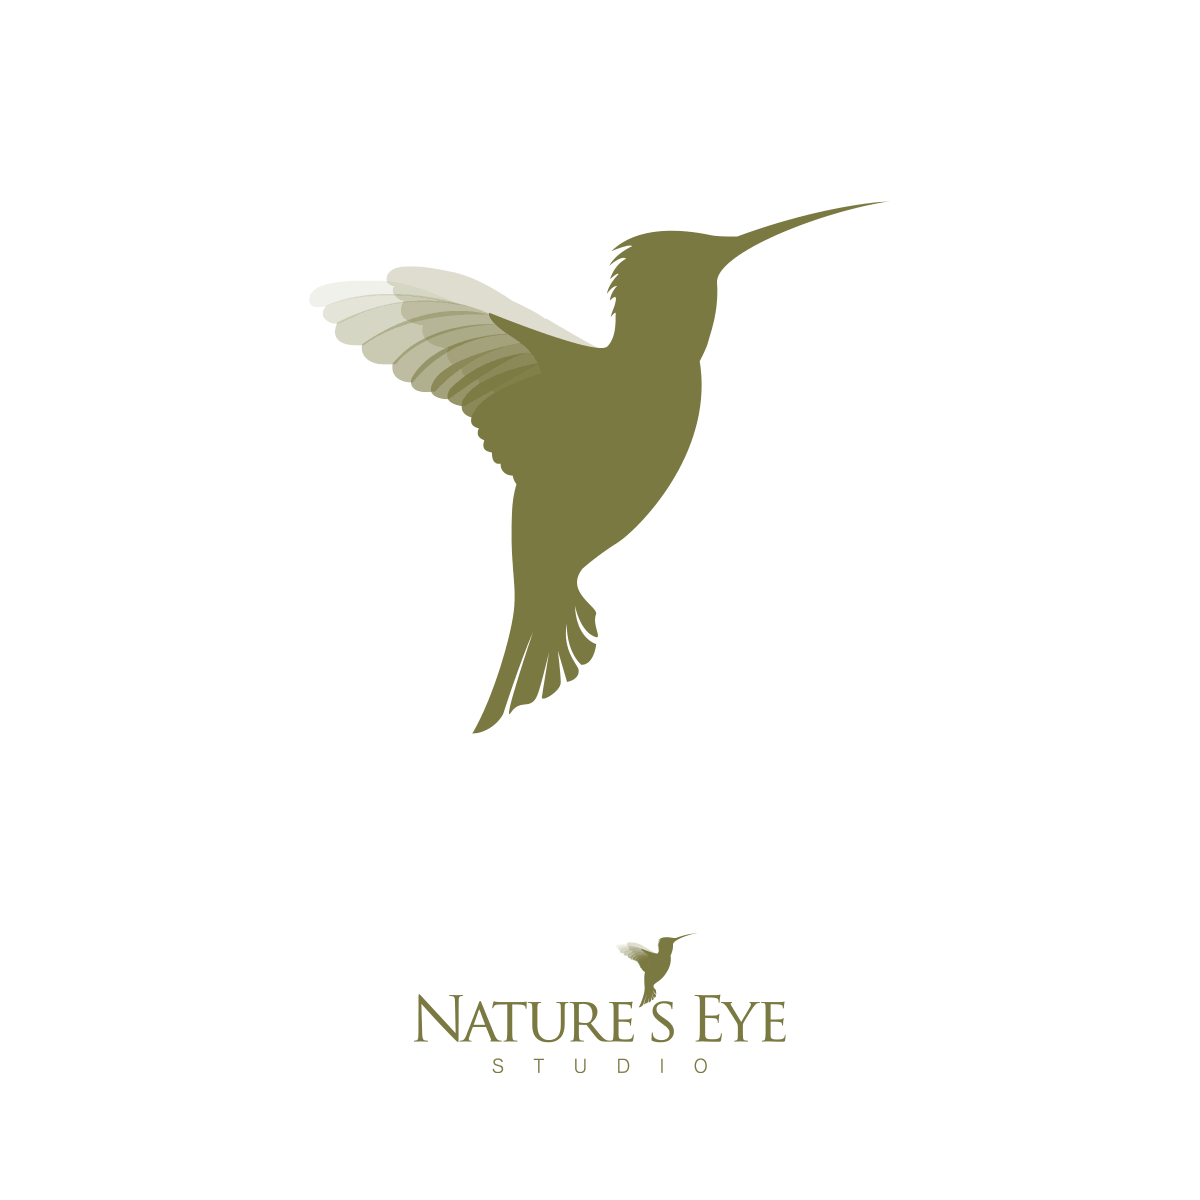 Nature's Eye Studio logo